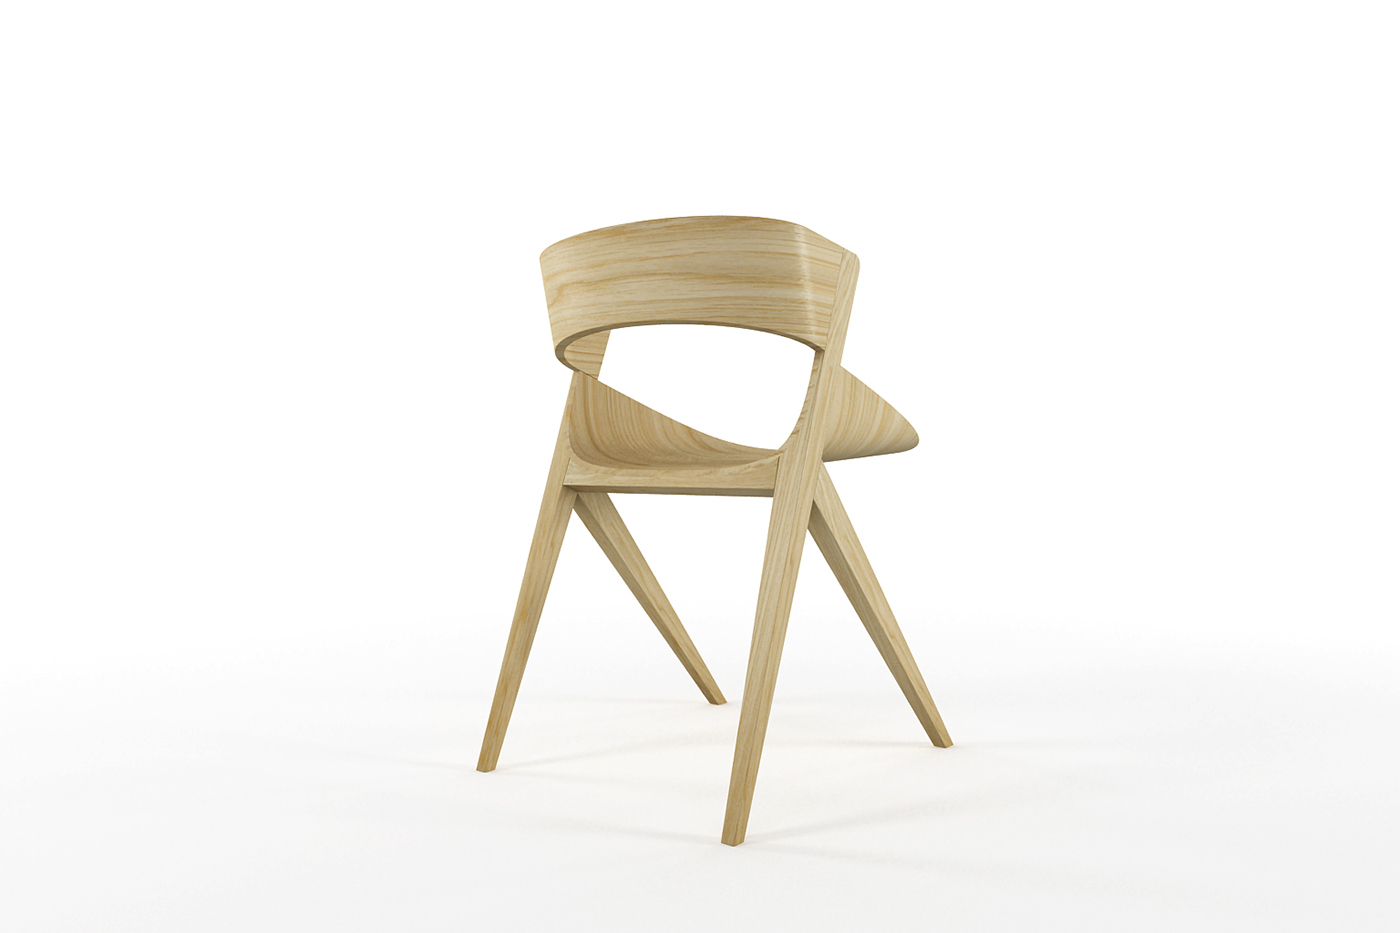 chair design furniture Polywood wood industrial bench art oak handcraft